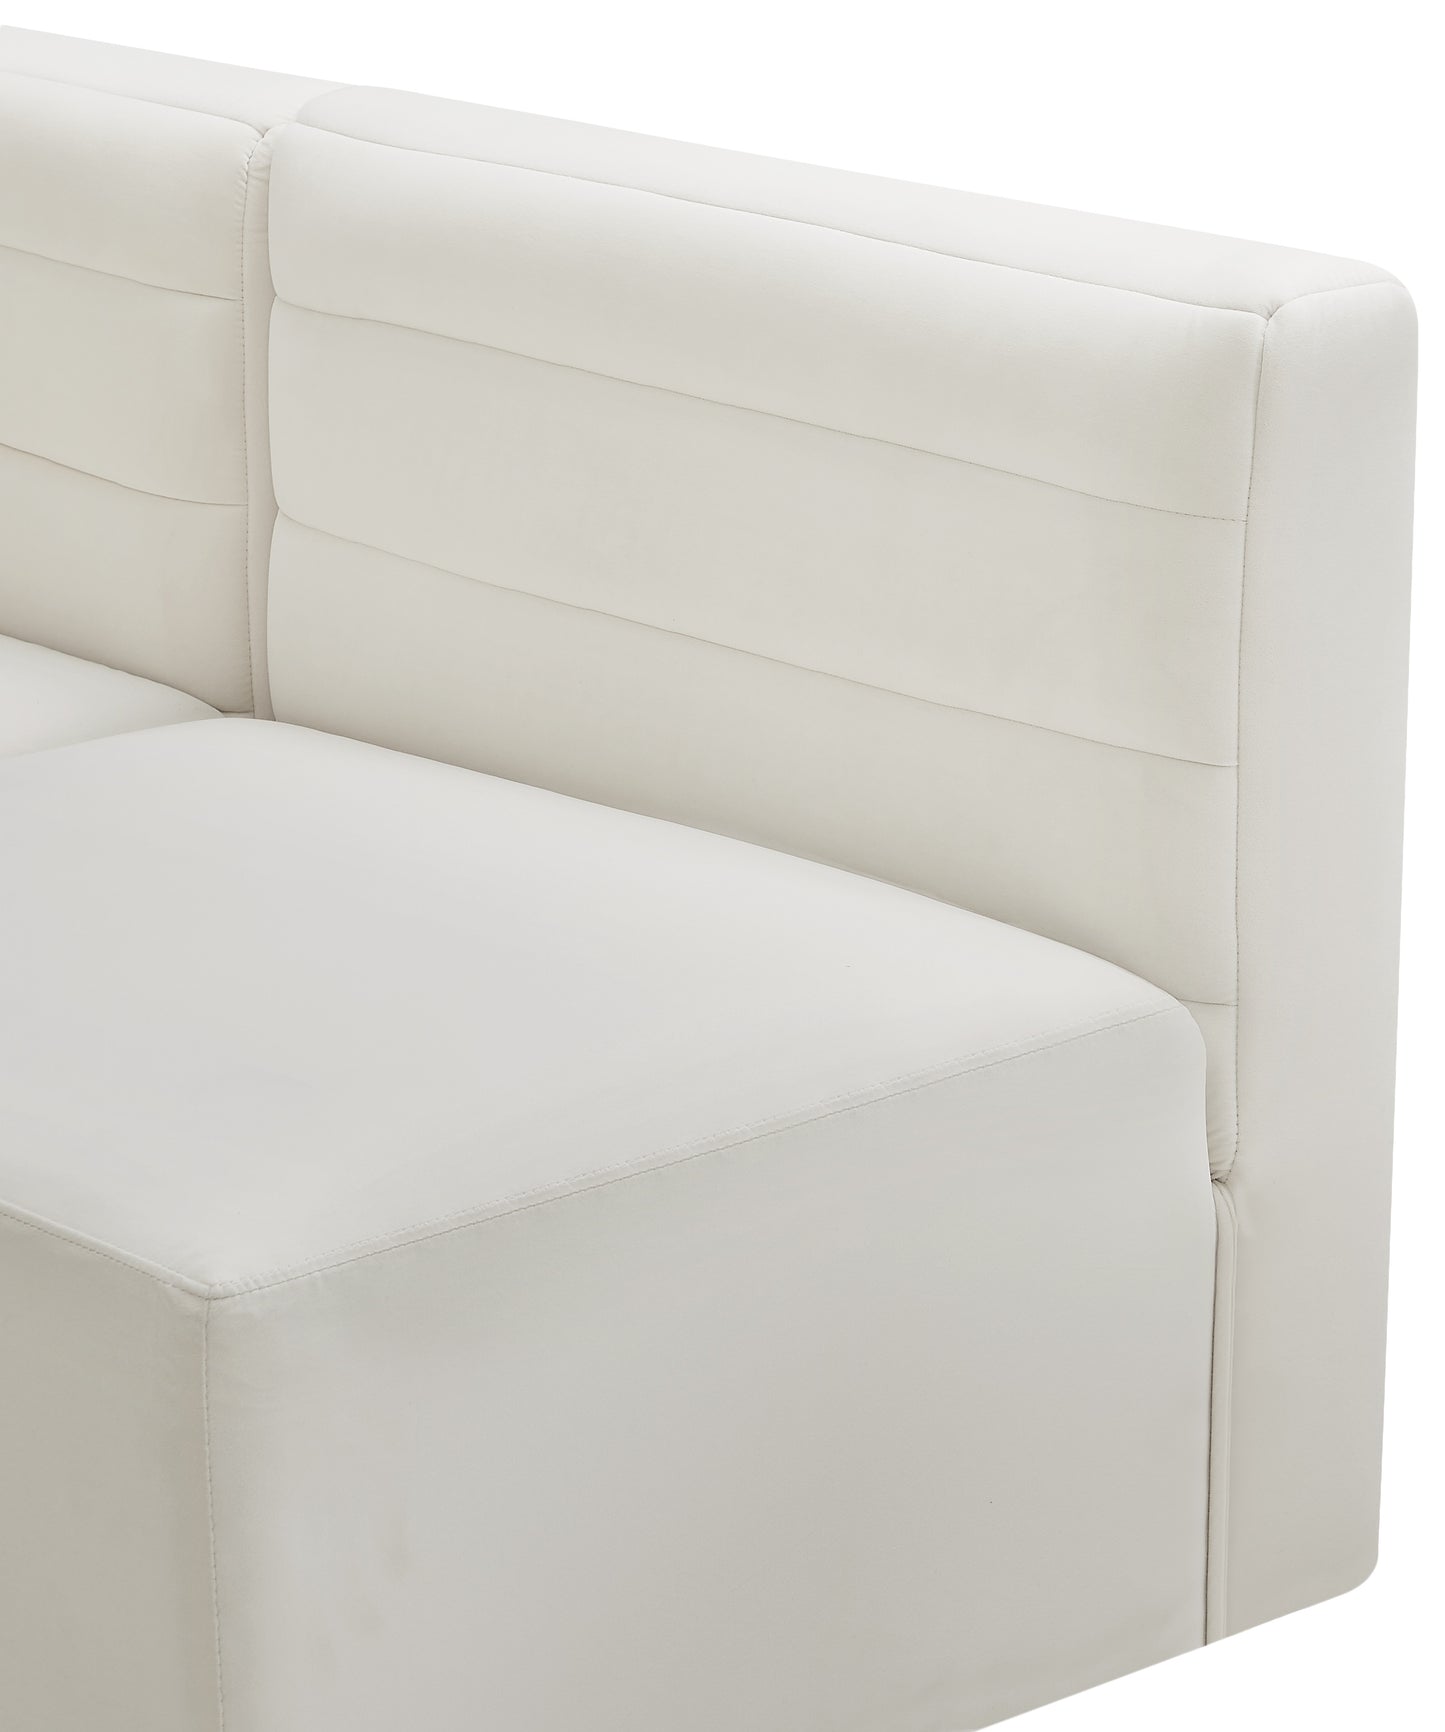 amelia cream velvet modular corner chair corner